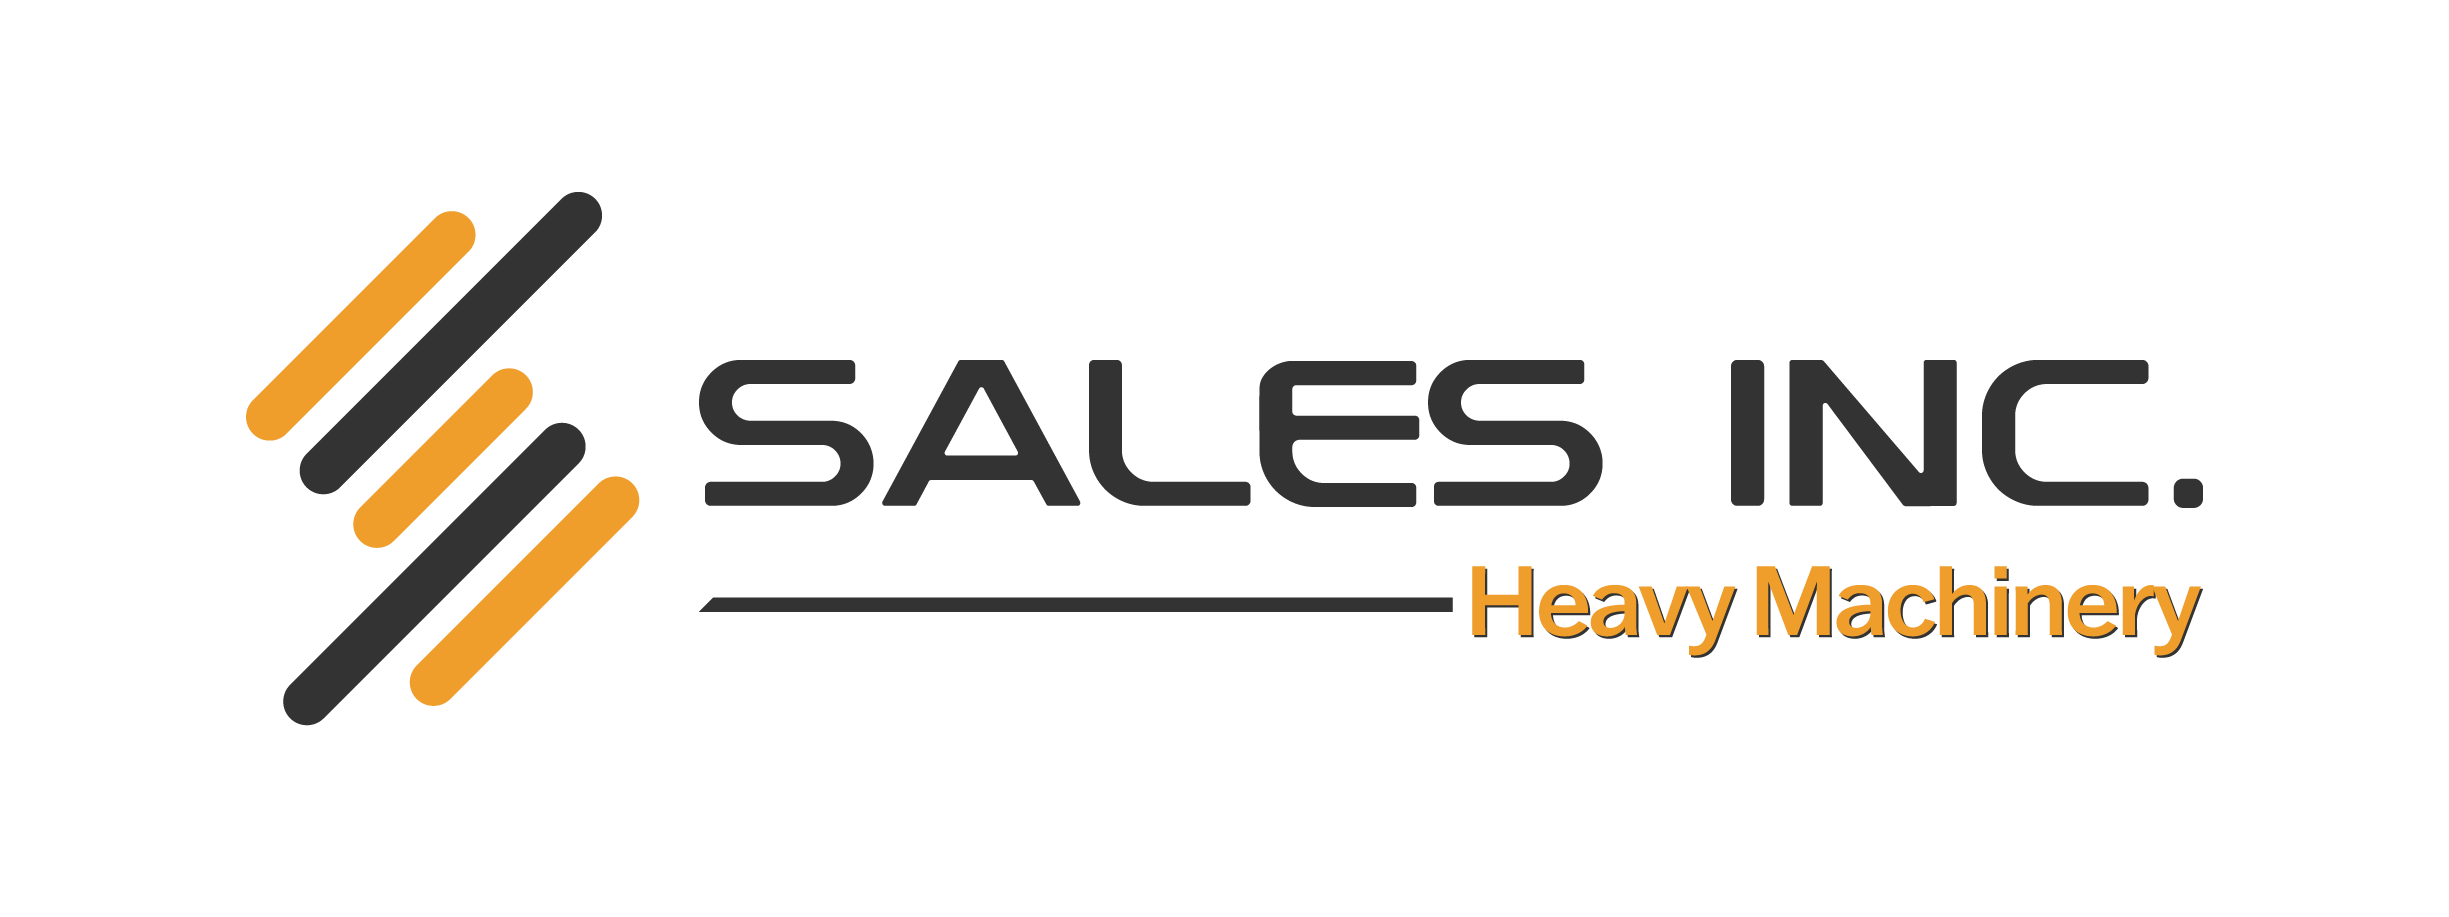 SALES IN Wholesale Heavy Machinery Full Logo